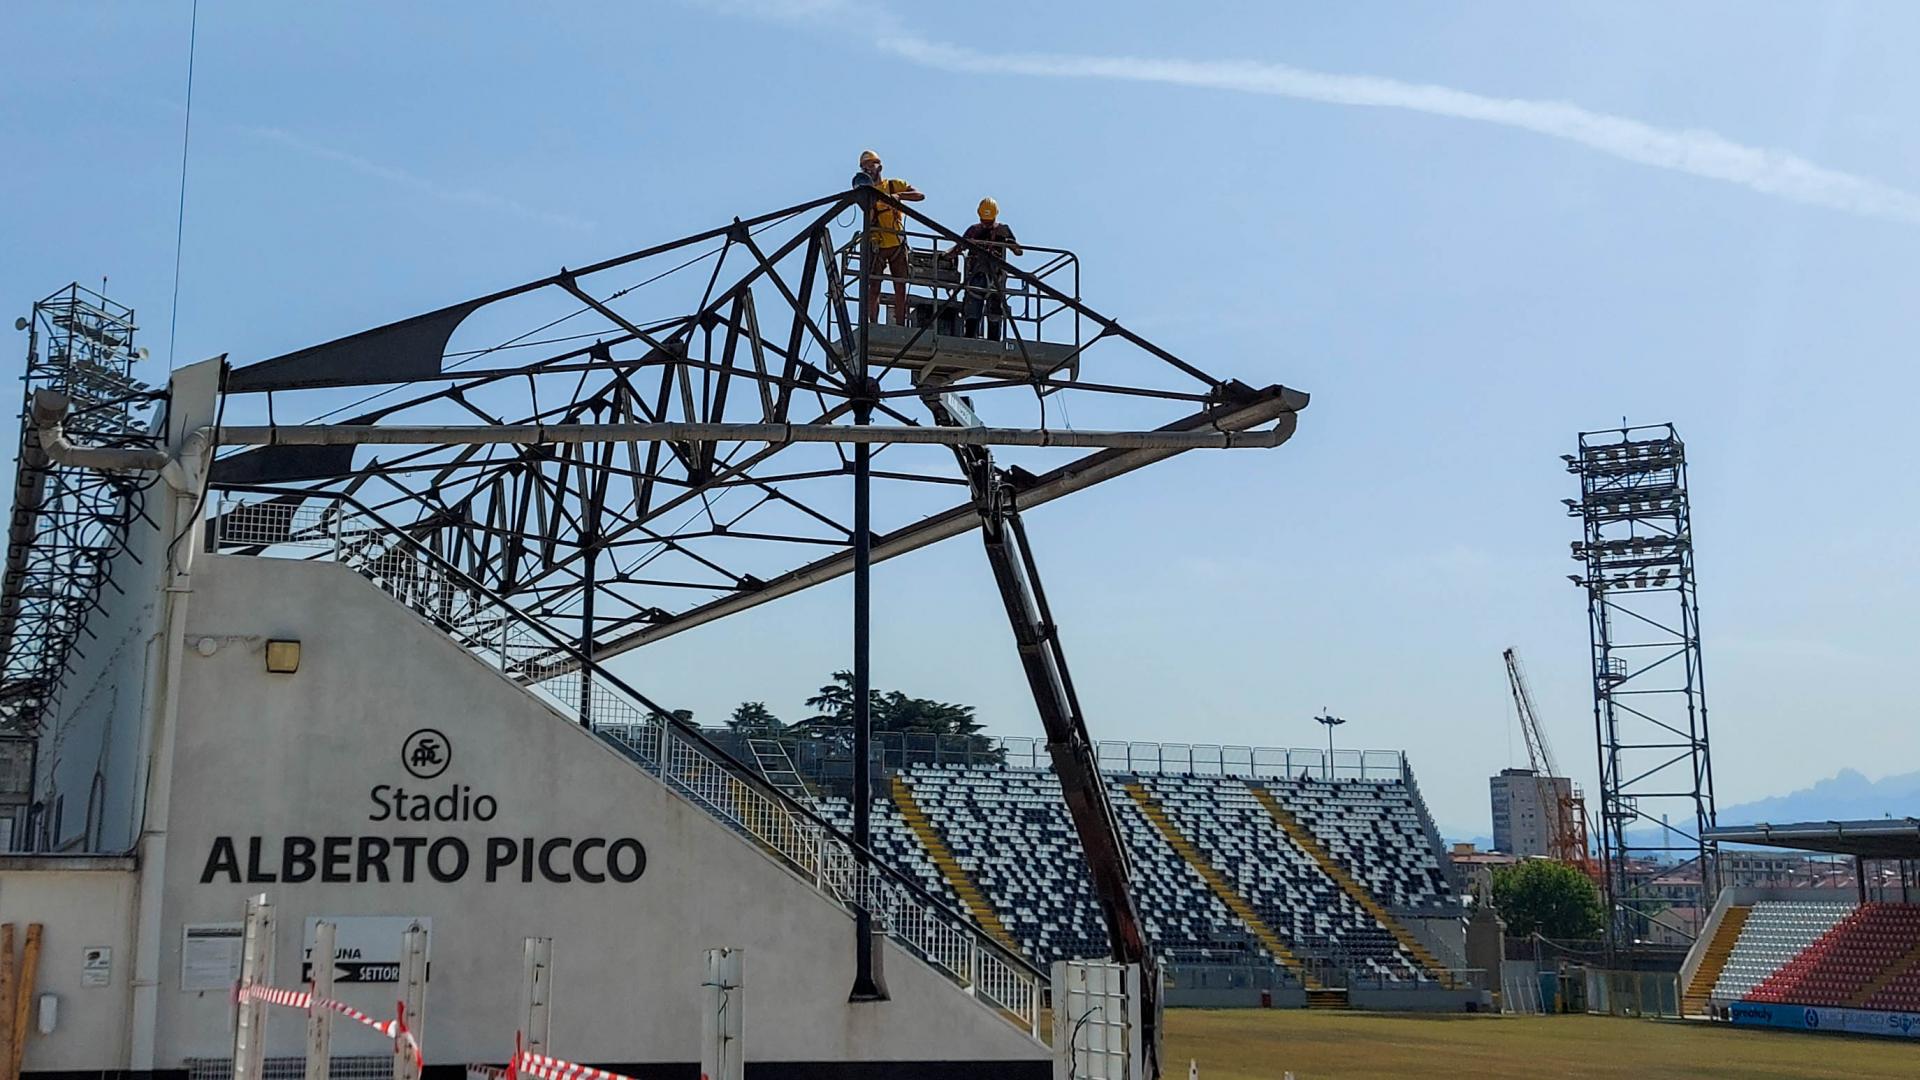 "Alberto Picco" stadium: modernization and renovation work has begun